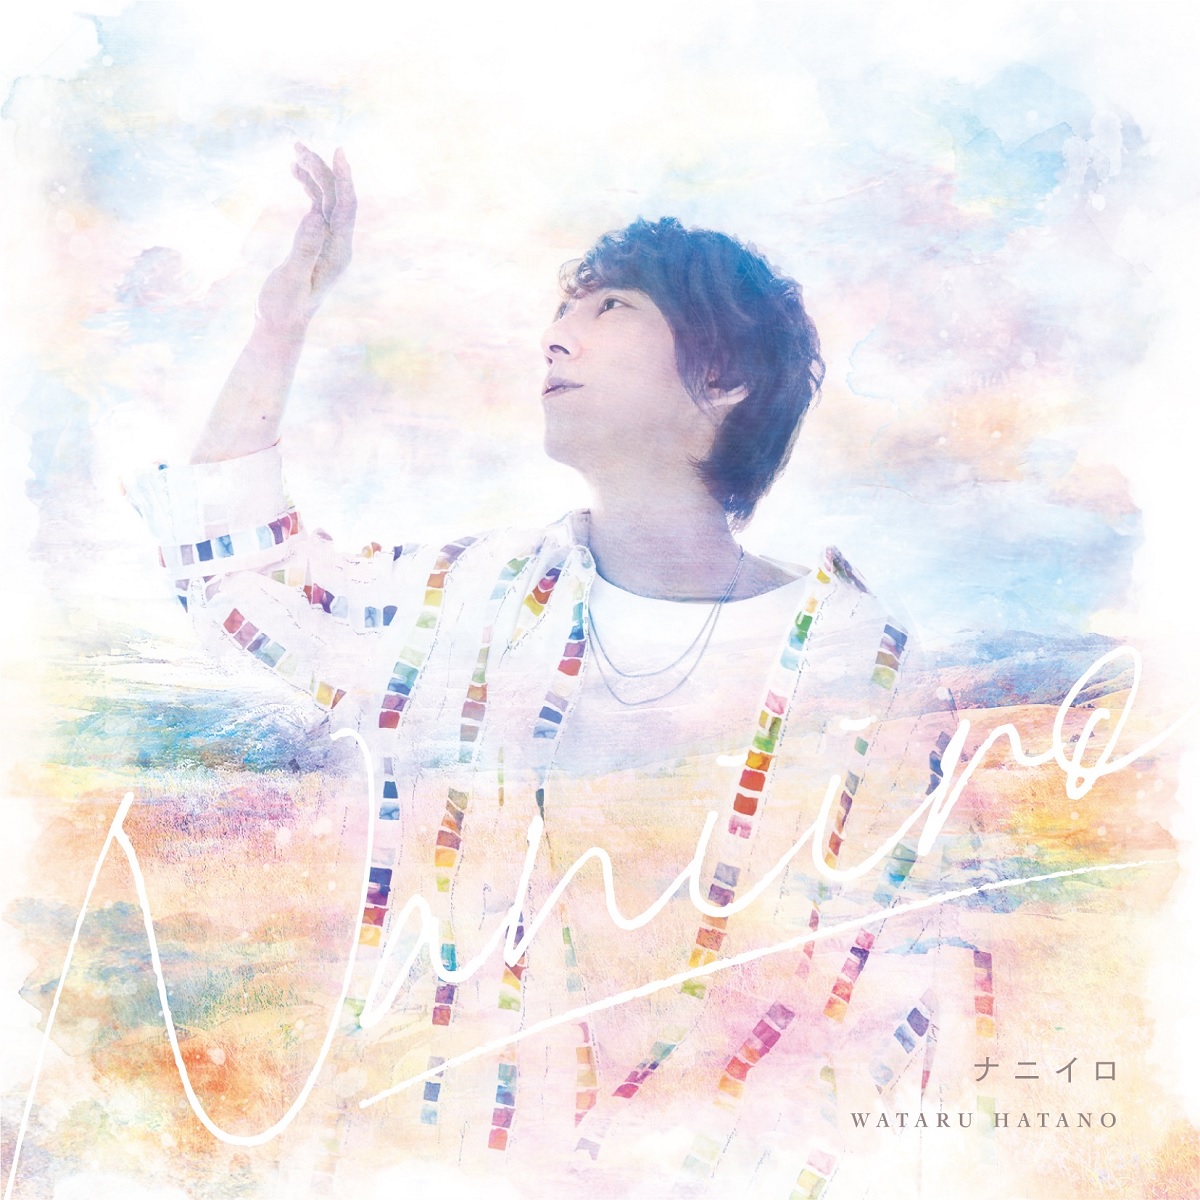 Cover for『Wataru Hatano - Naniiro』from the release『Naniiro』